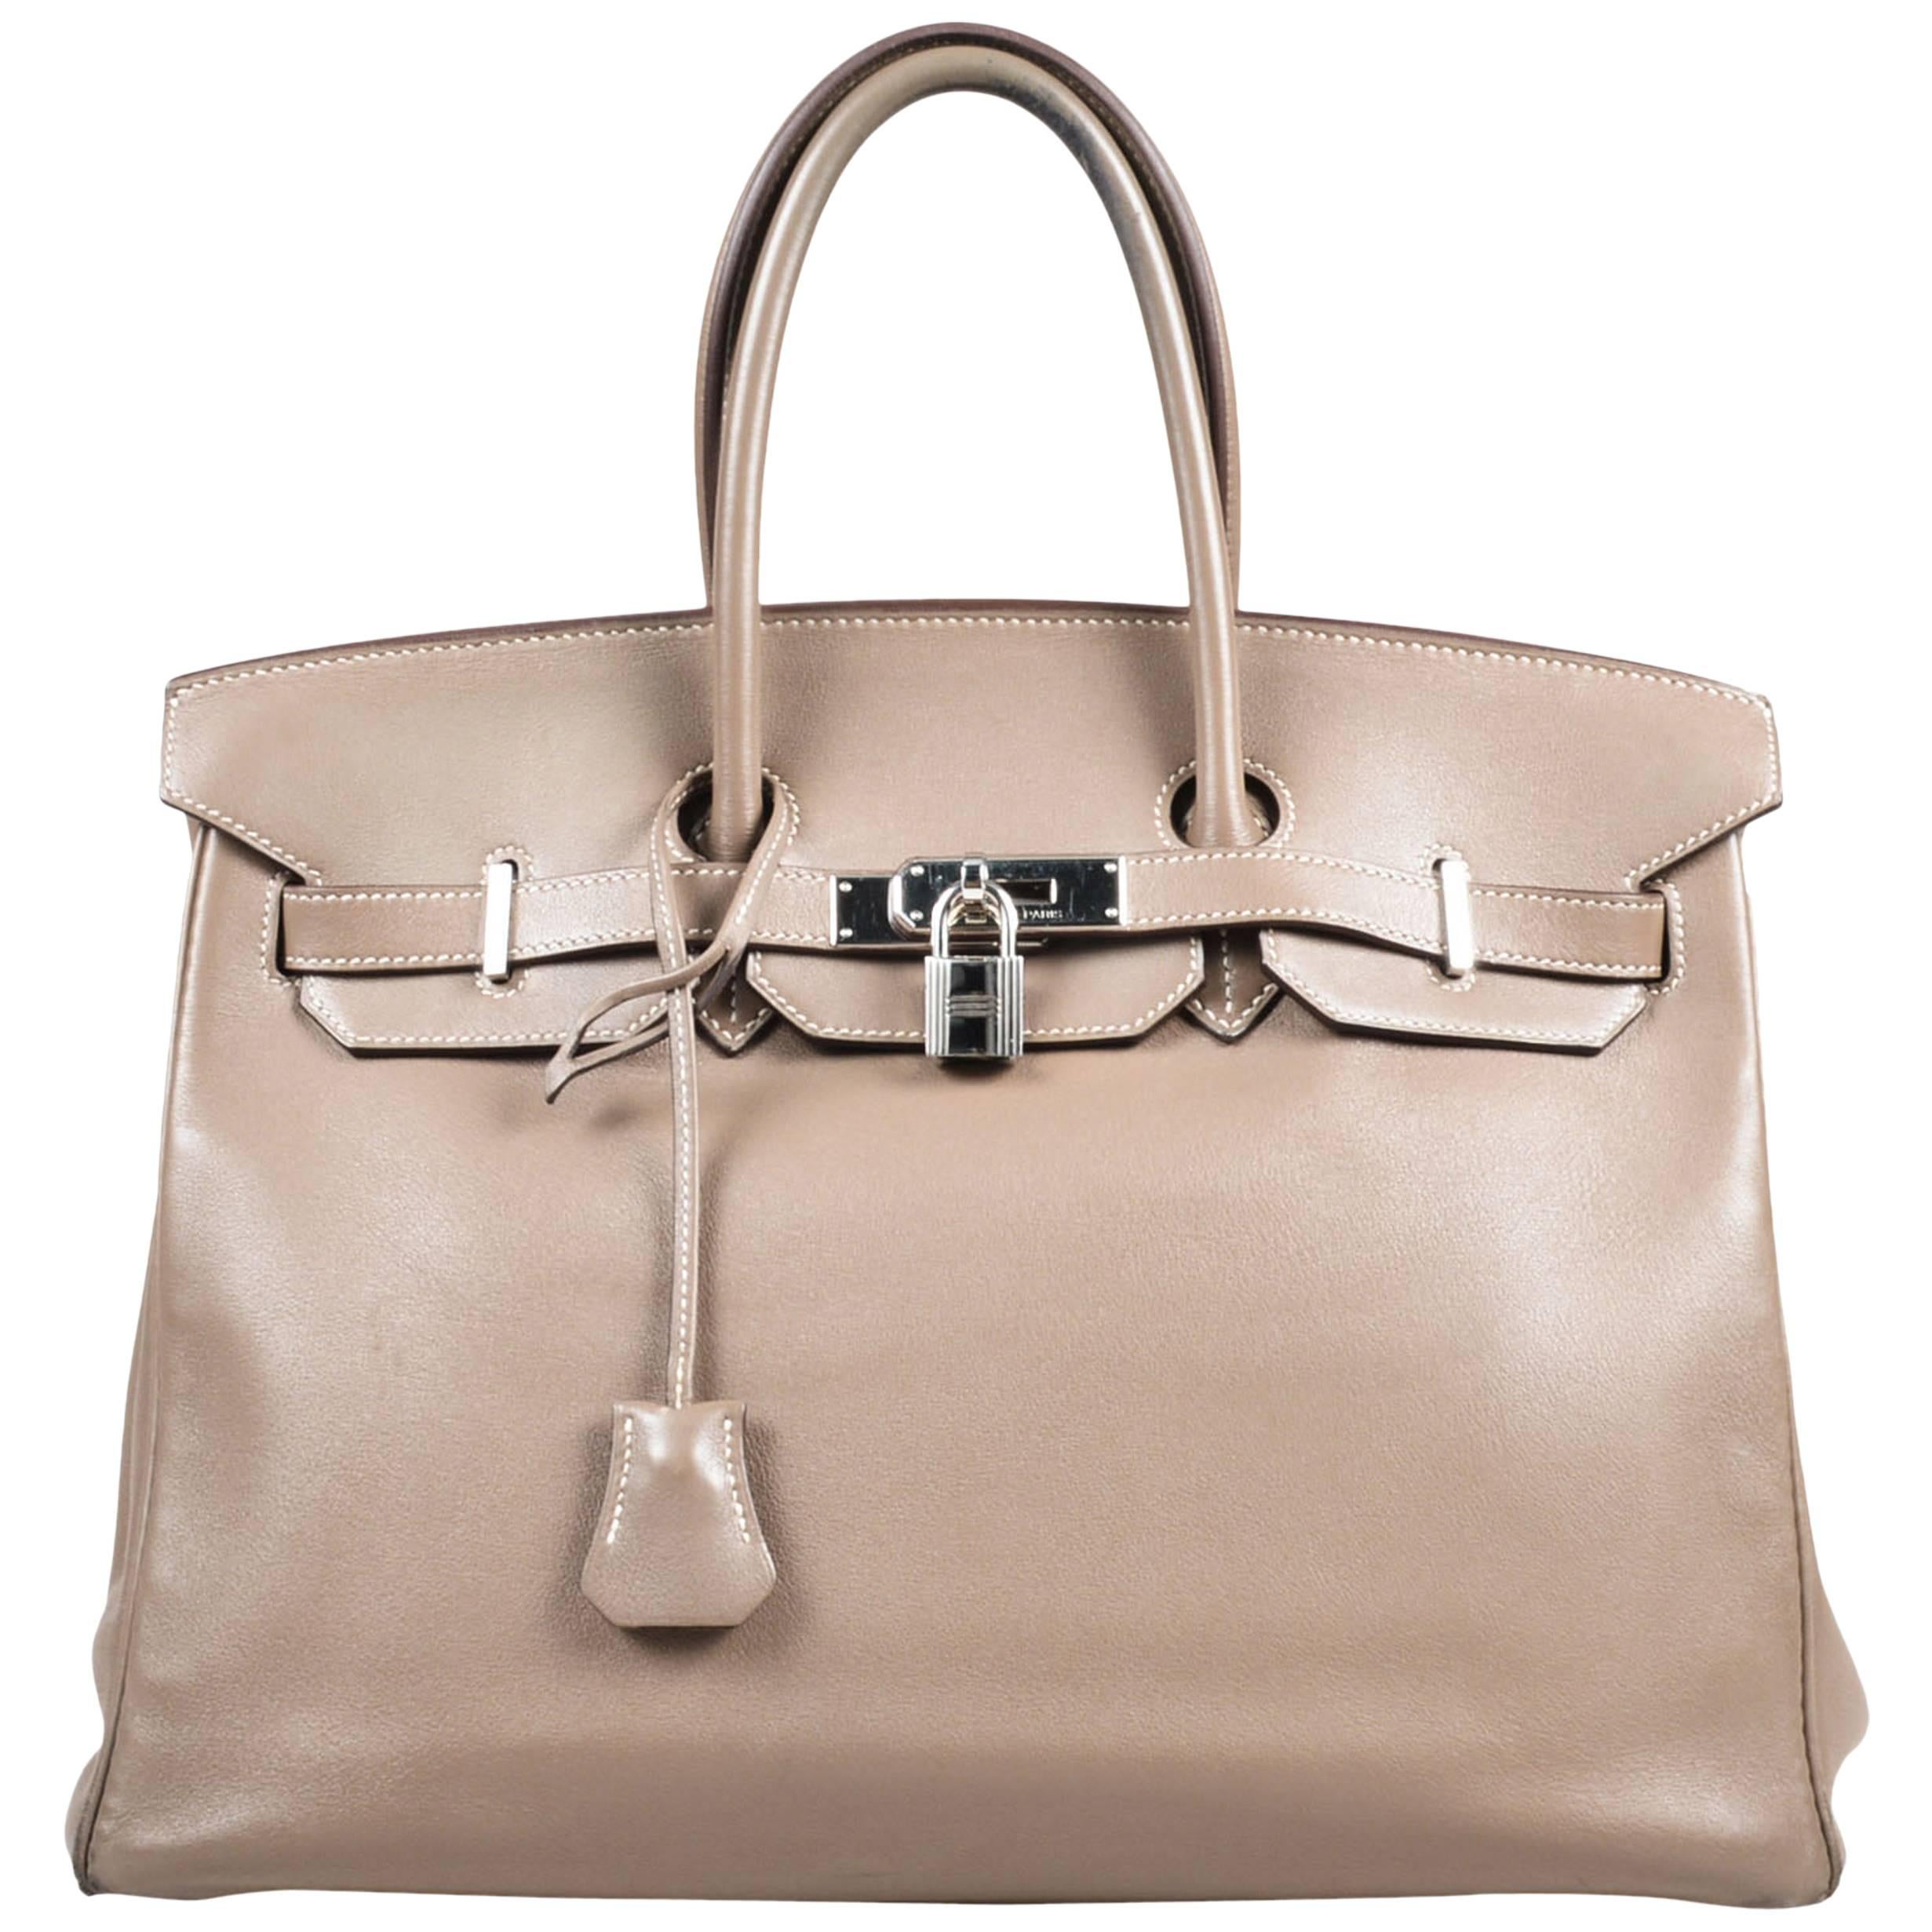 Hermes "Etoupe" Gray Taupe Swift Leather & Palladium Hardware 35 cm Birkin Bag For Sale